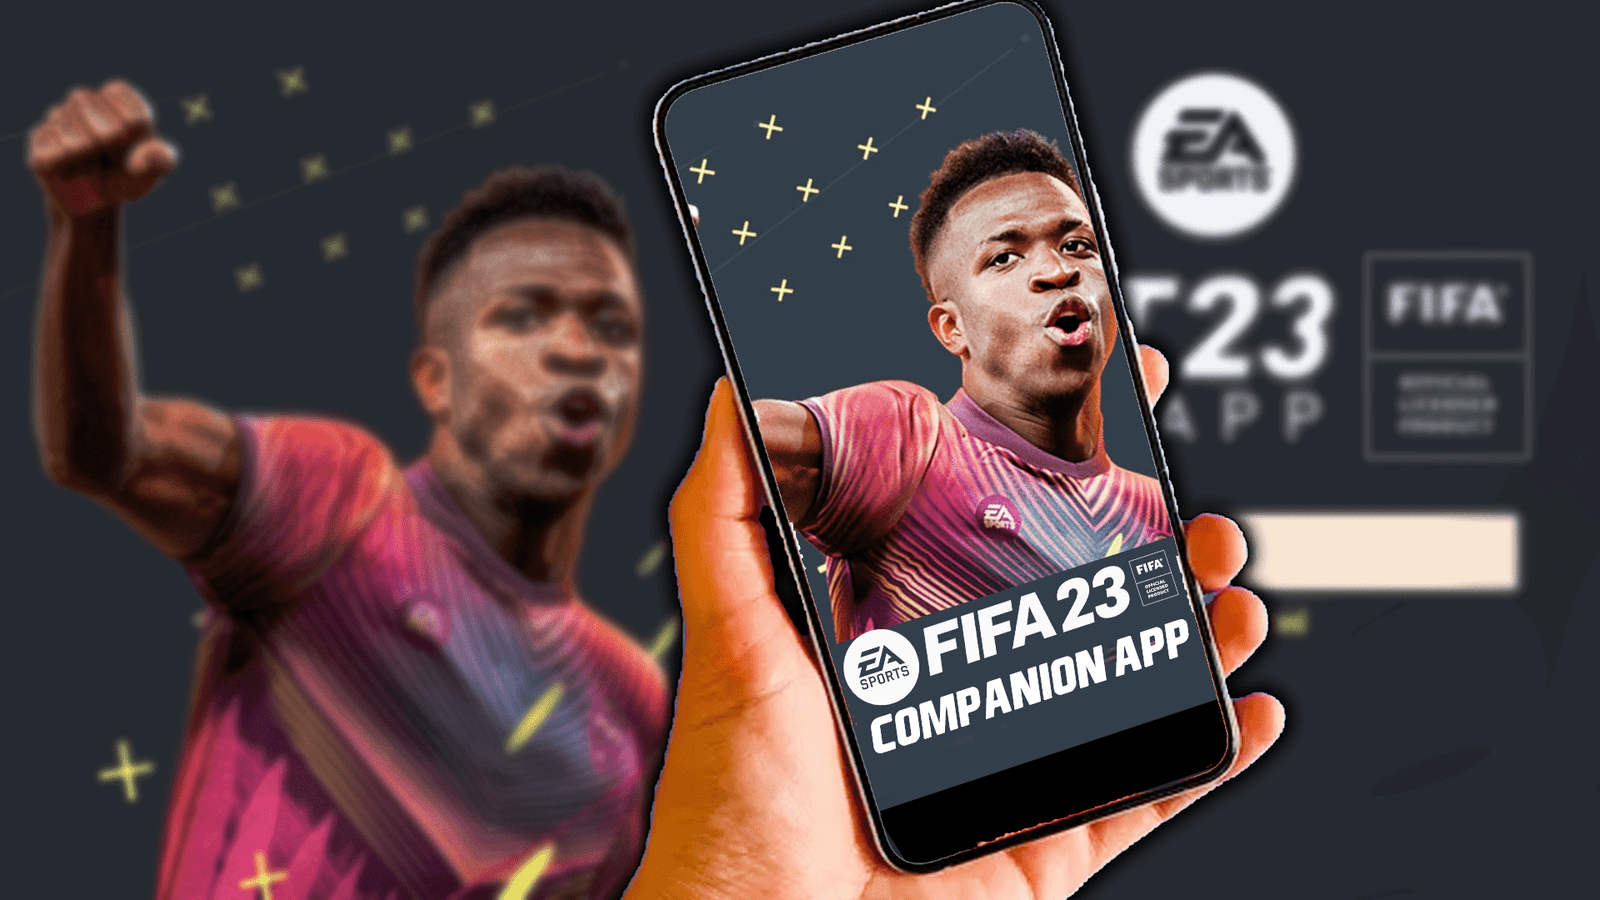 Date de sortie de l'application FIFA 23 Companion